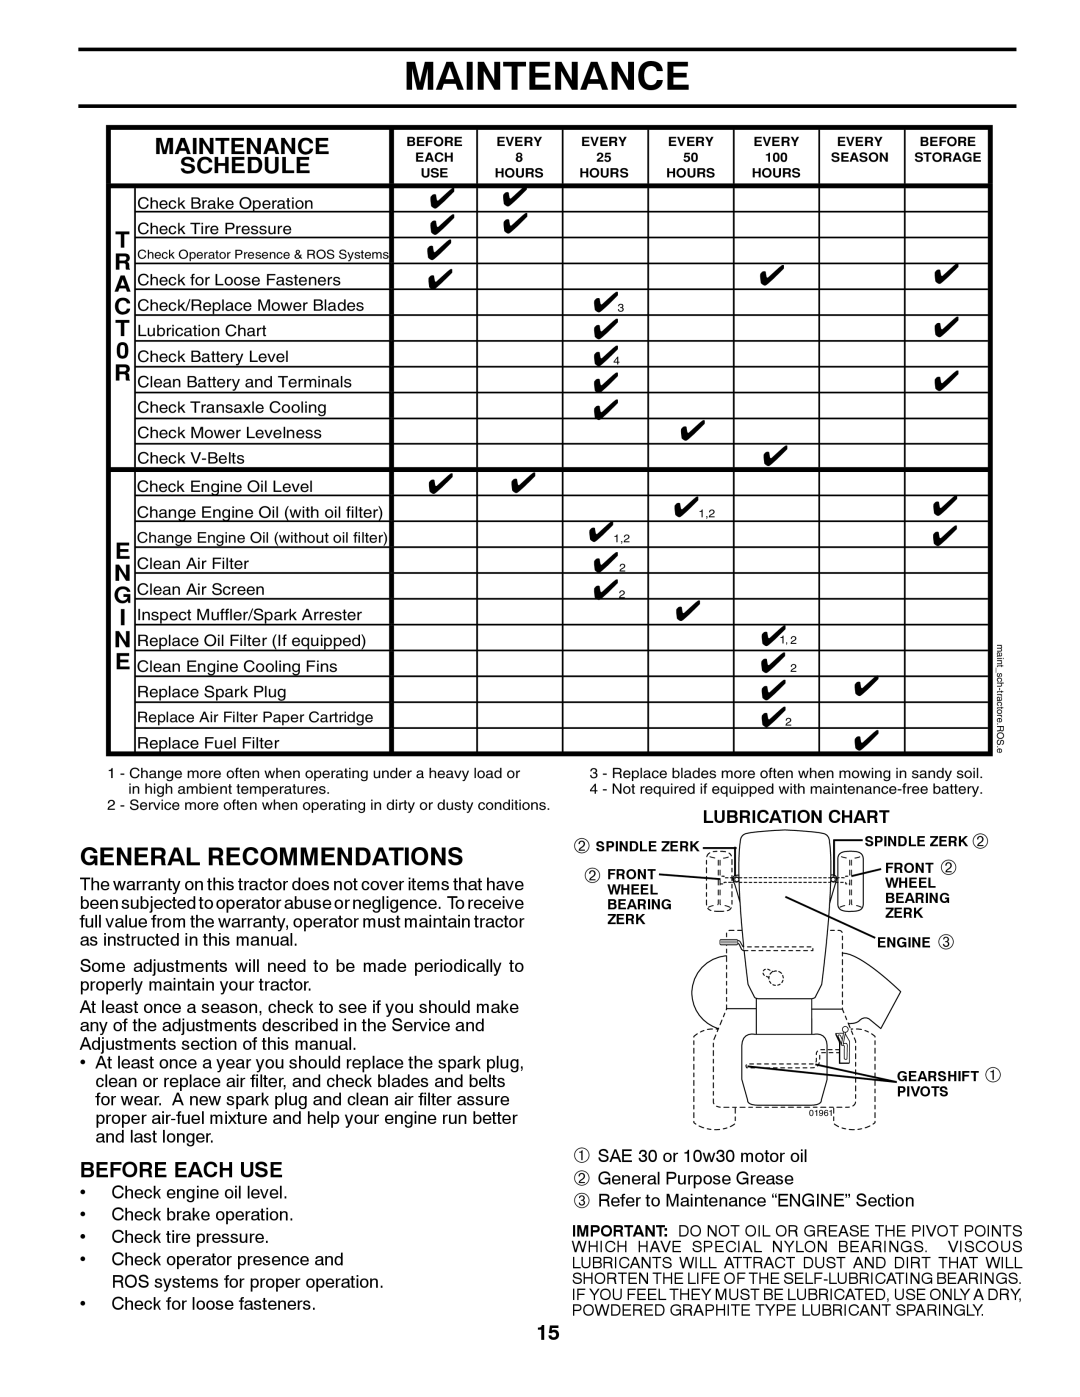 Husqvarna TS300-E3 manual Maintenance, Lubrication Chart 